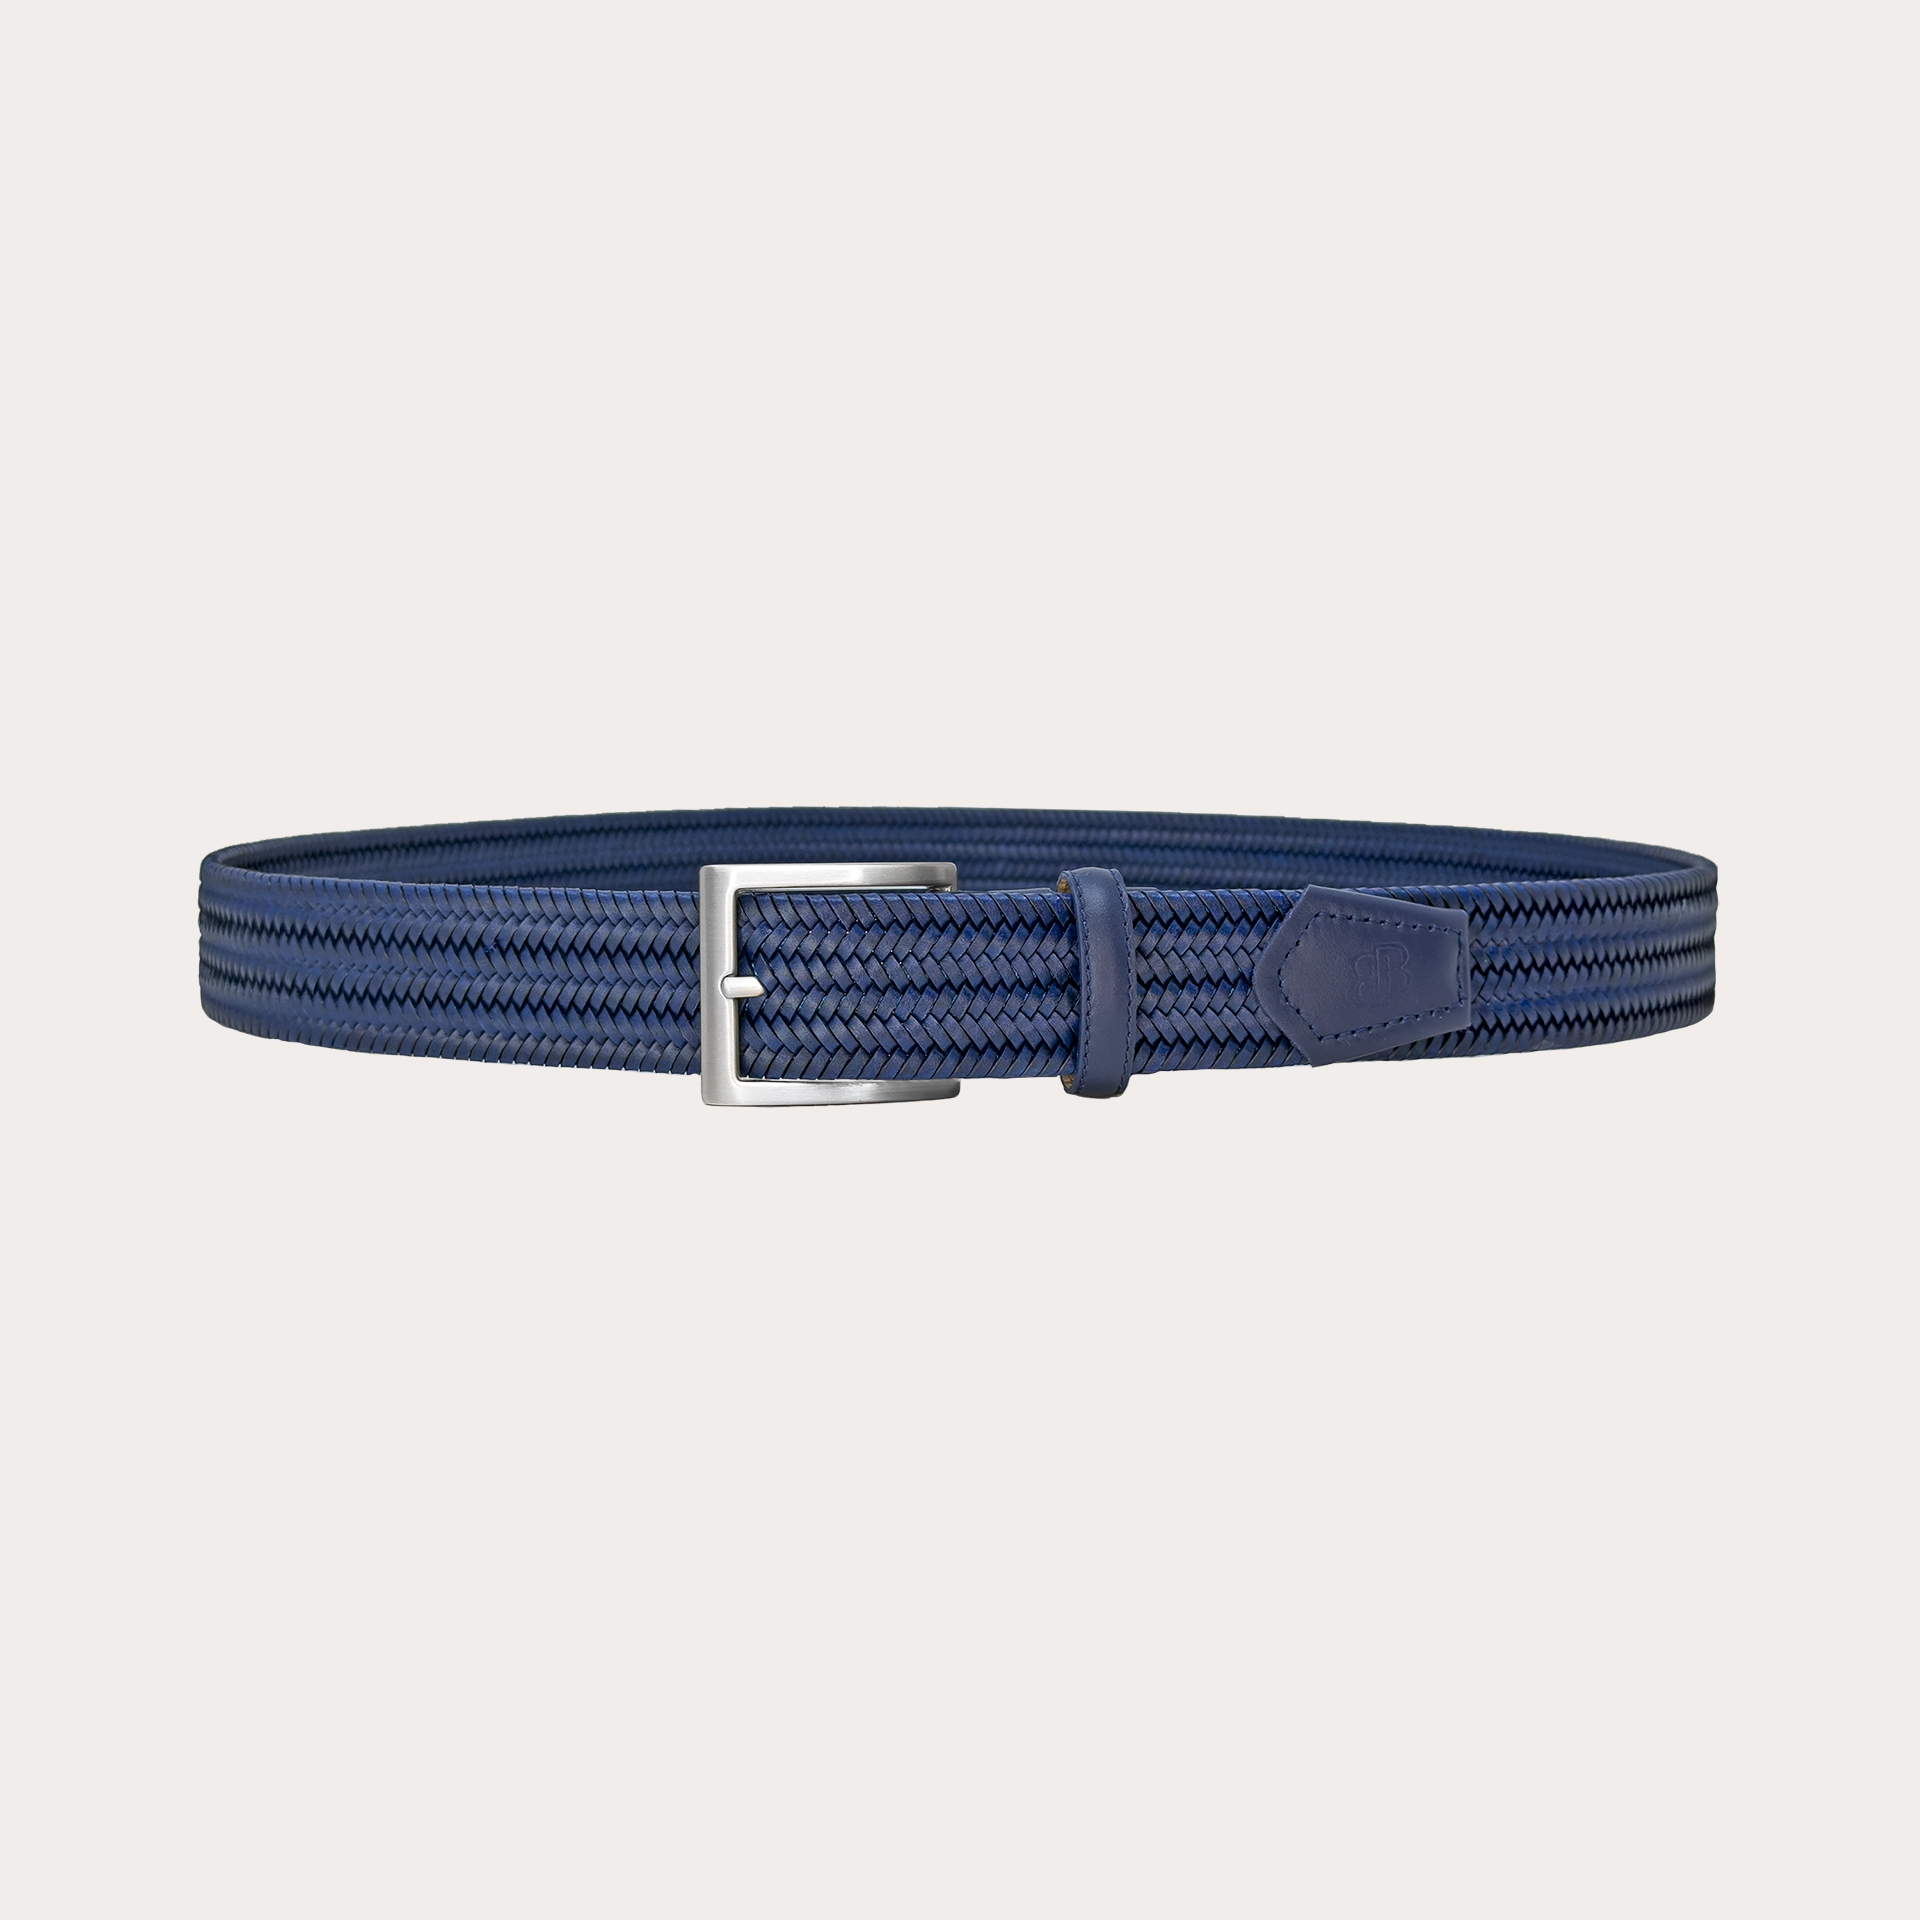 Braided elastic belt in blue bonded leather nickel free